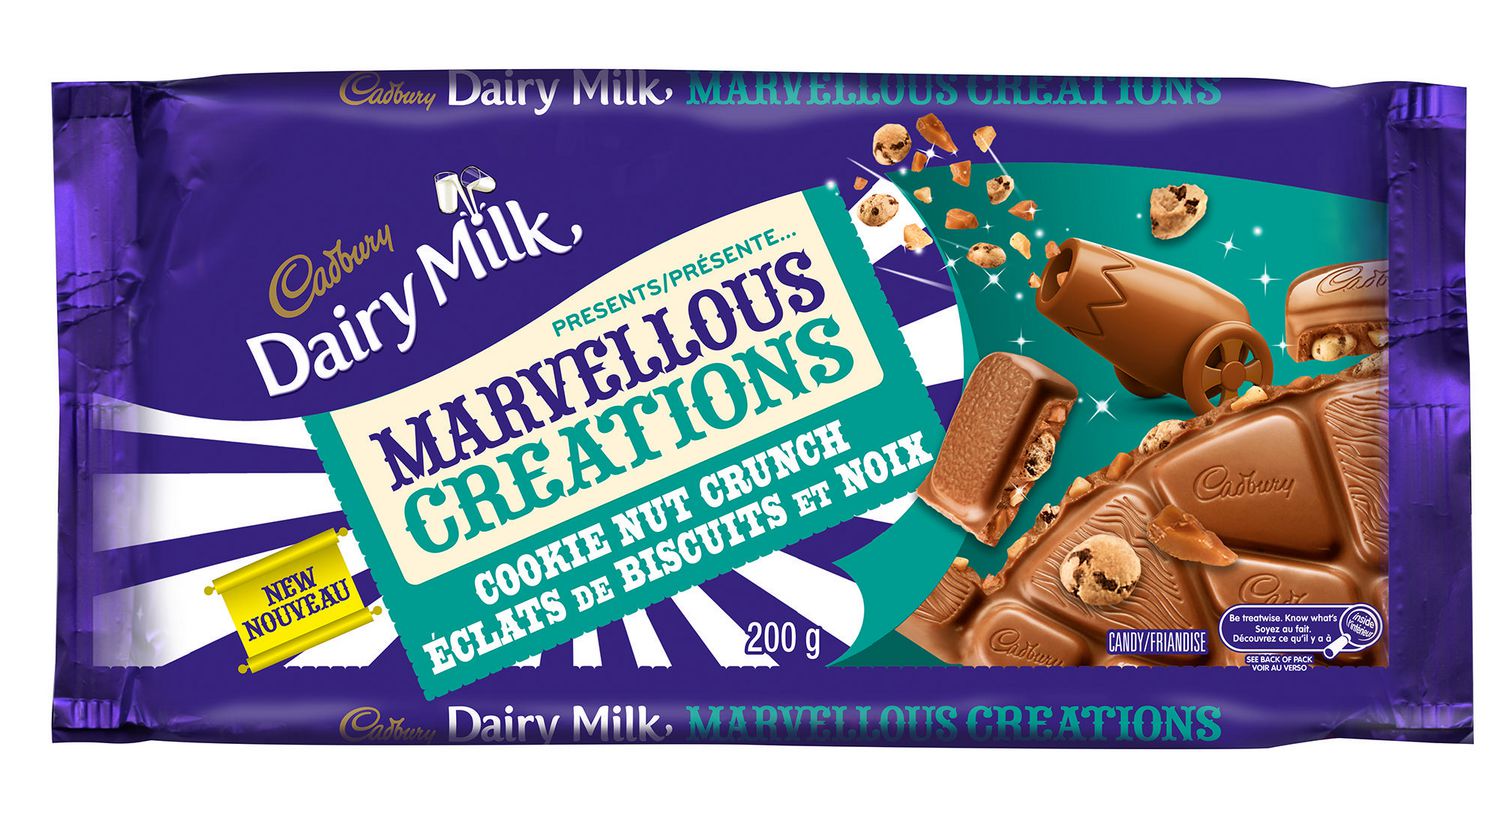 Cadbury Dairy Milk Marvellous Creations Cookie Nut Crunch